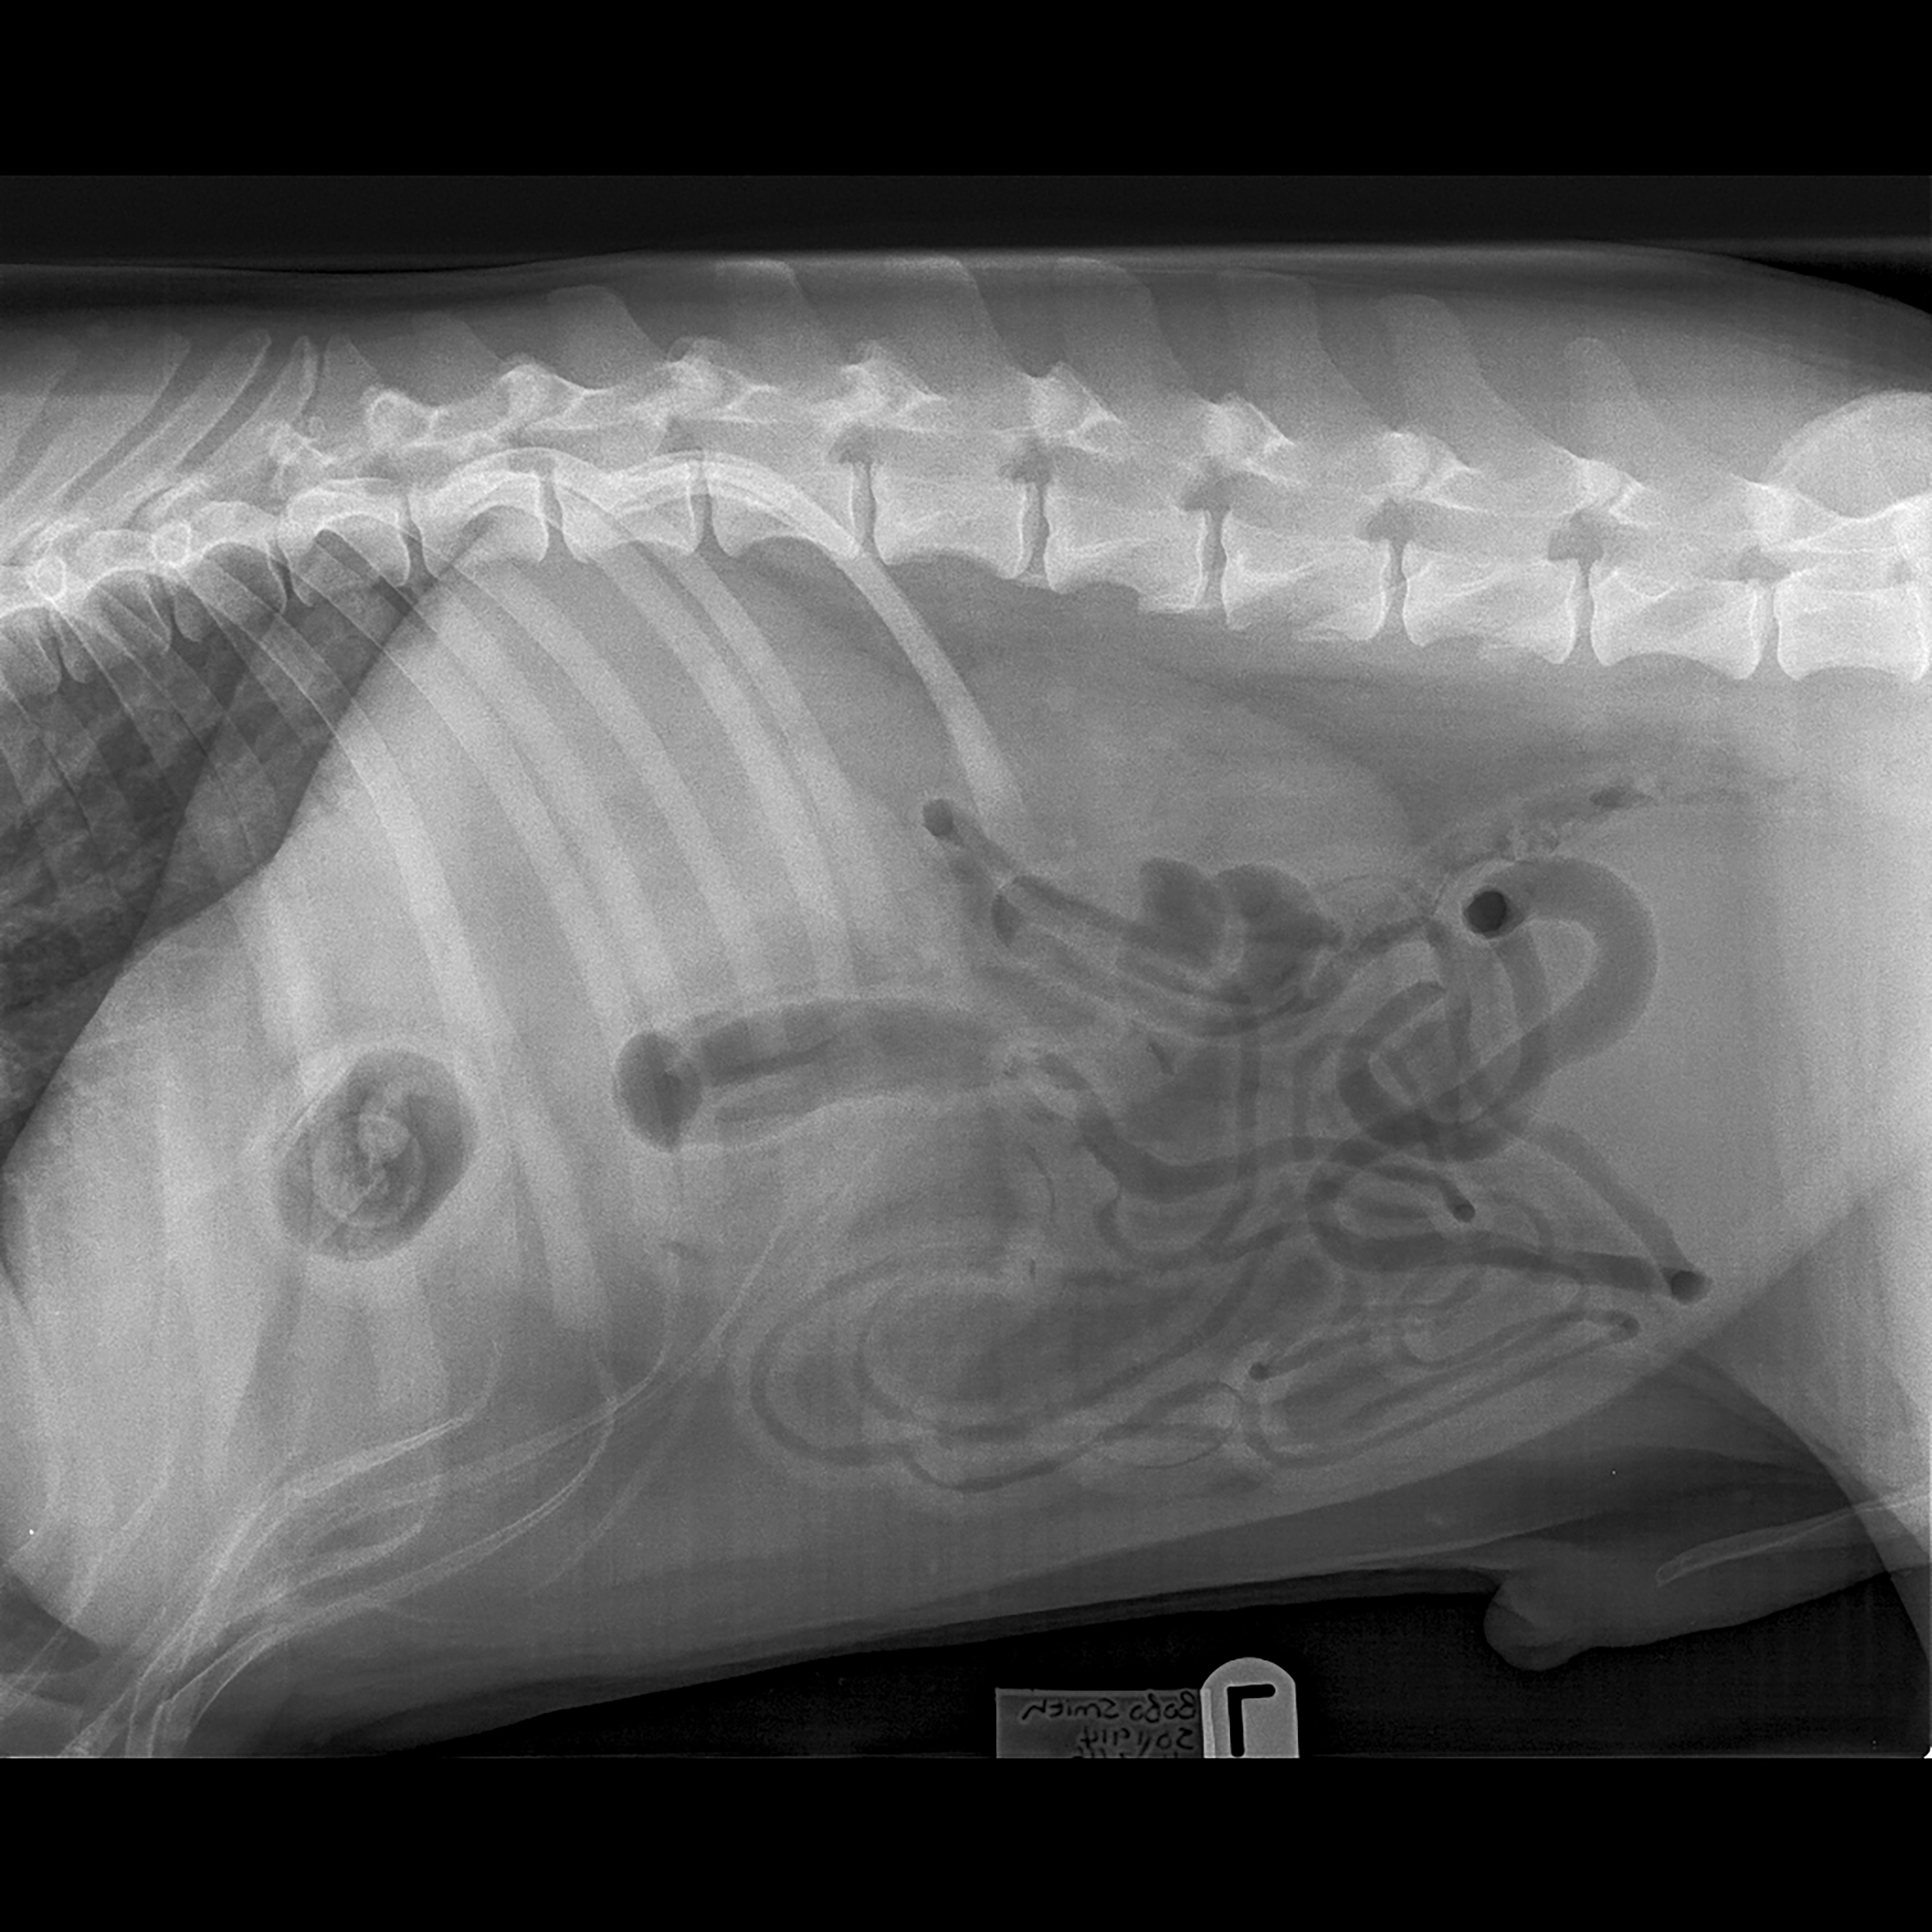 An X-ray of Bobo's abdomen shows an egg-shaped dark mass inside the stomach